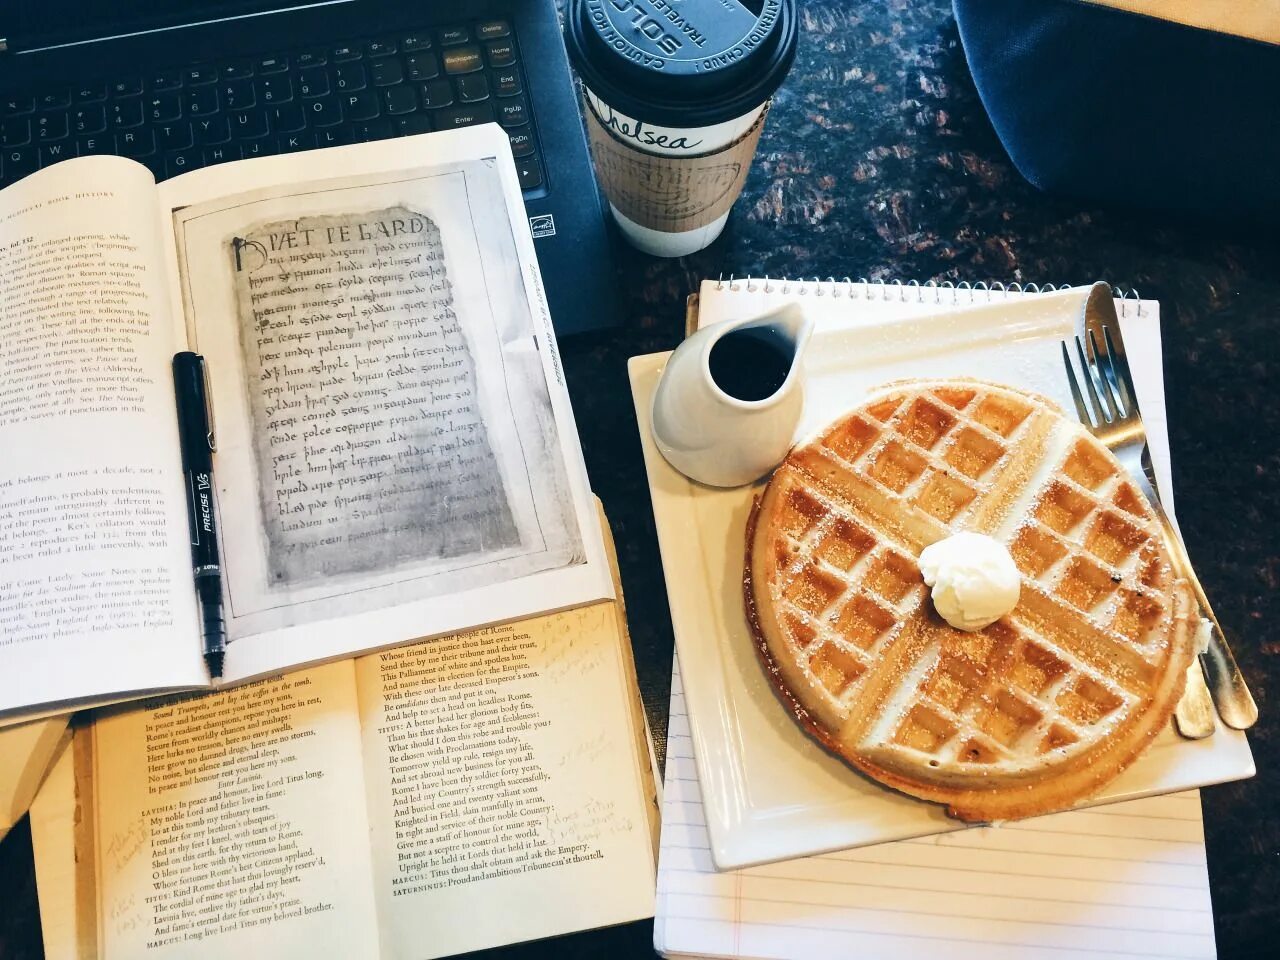 Дело не еде книга. Книги о еде. Книга Завтраки. Завтрак и книжки. Чтение и еда.